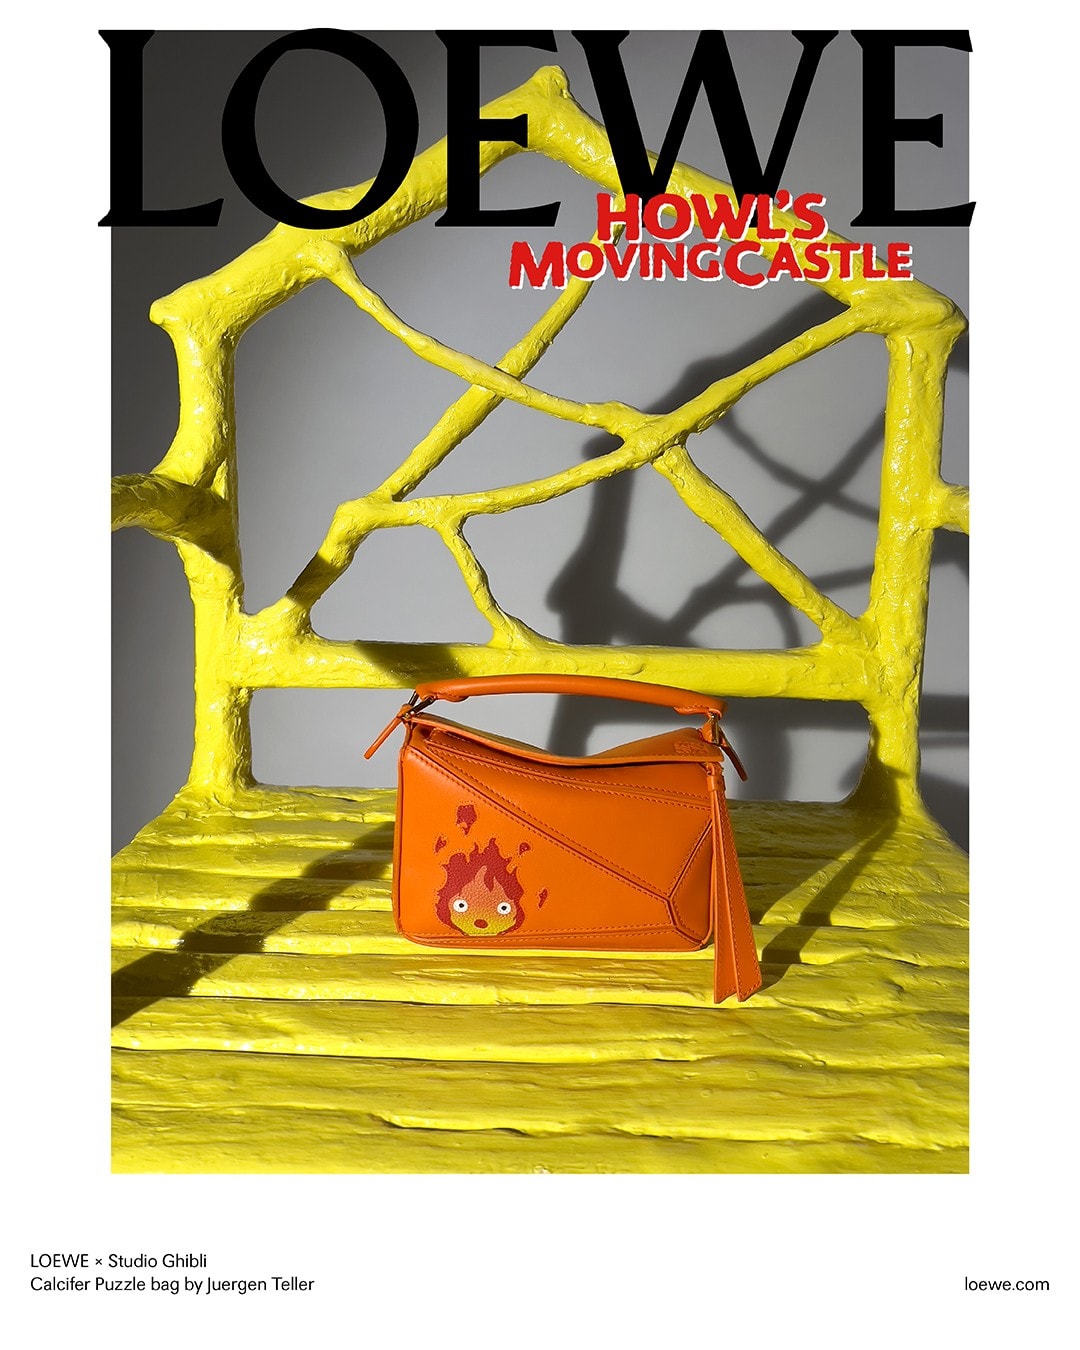 LOEWE x 吉卜力工作室《霍爾的移動城堡》最新聯名系列形象大片正式亮相